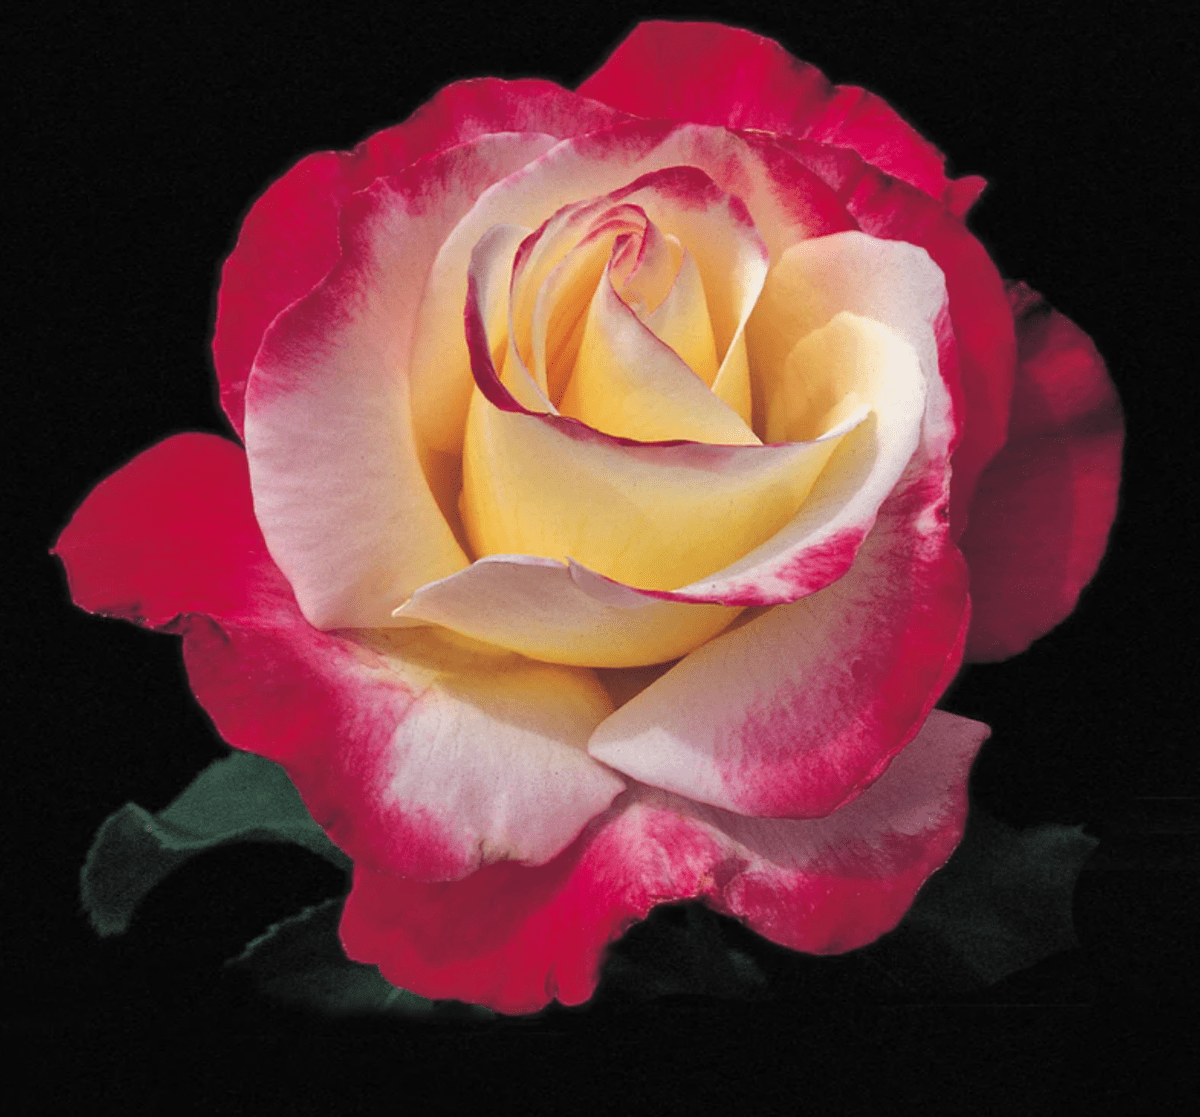 Las Vegas Rose - Hybrid Tea - Lightly Fragrant – Heirloom Roses